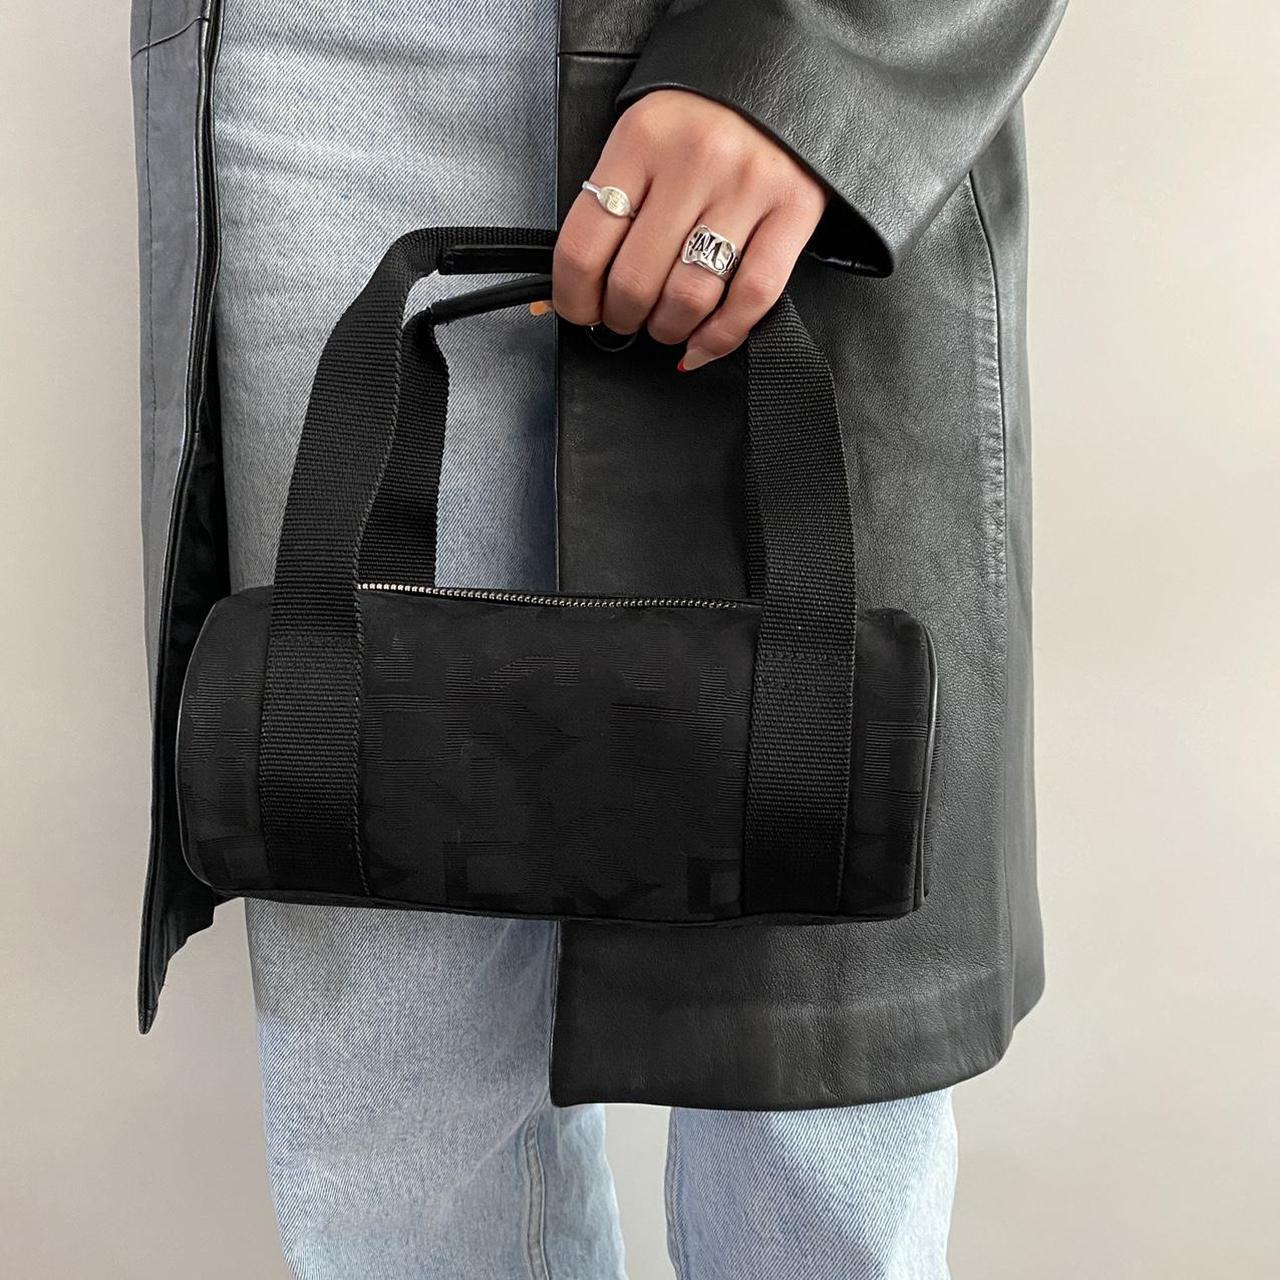 Product Image 2 - Black DKNY bag with monogram